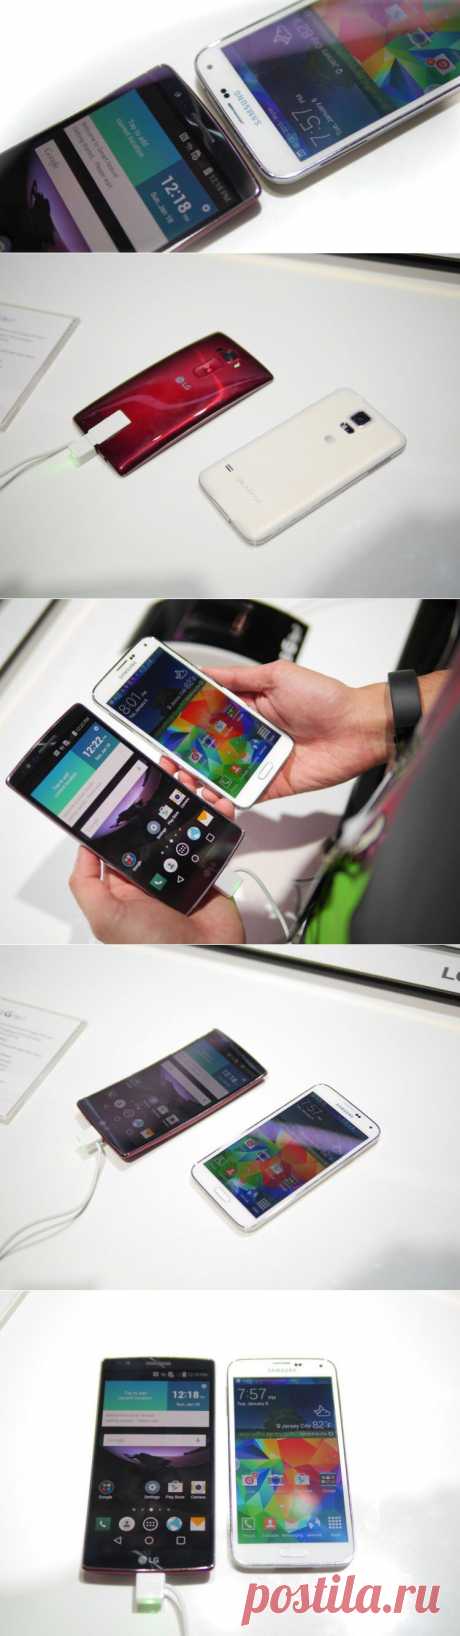 Основное превосходство LG G Flex 2 над Samsung Galaxy S5 - PCNEWS.RU